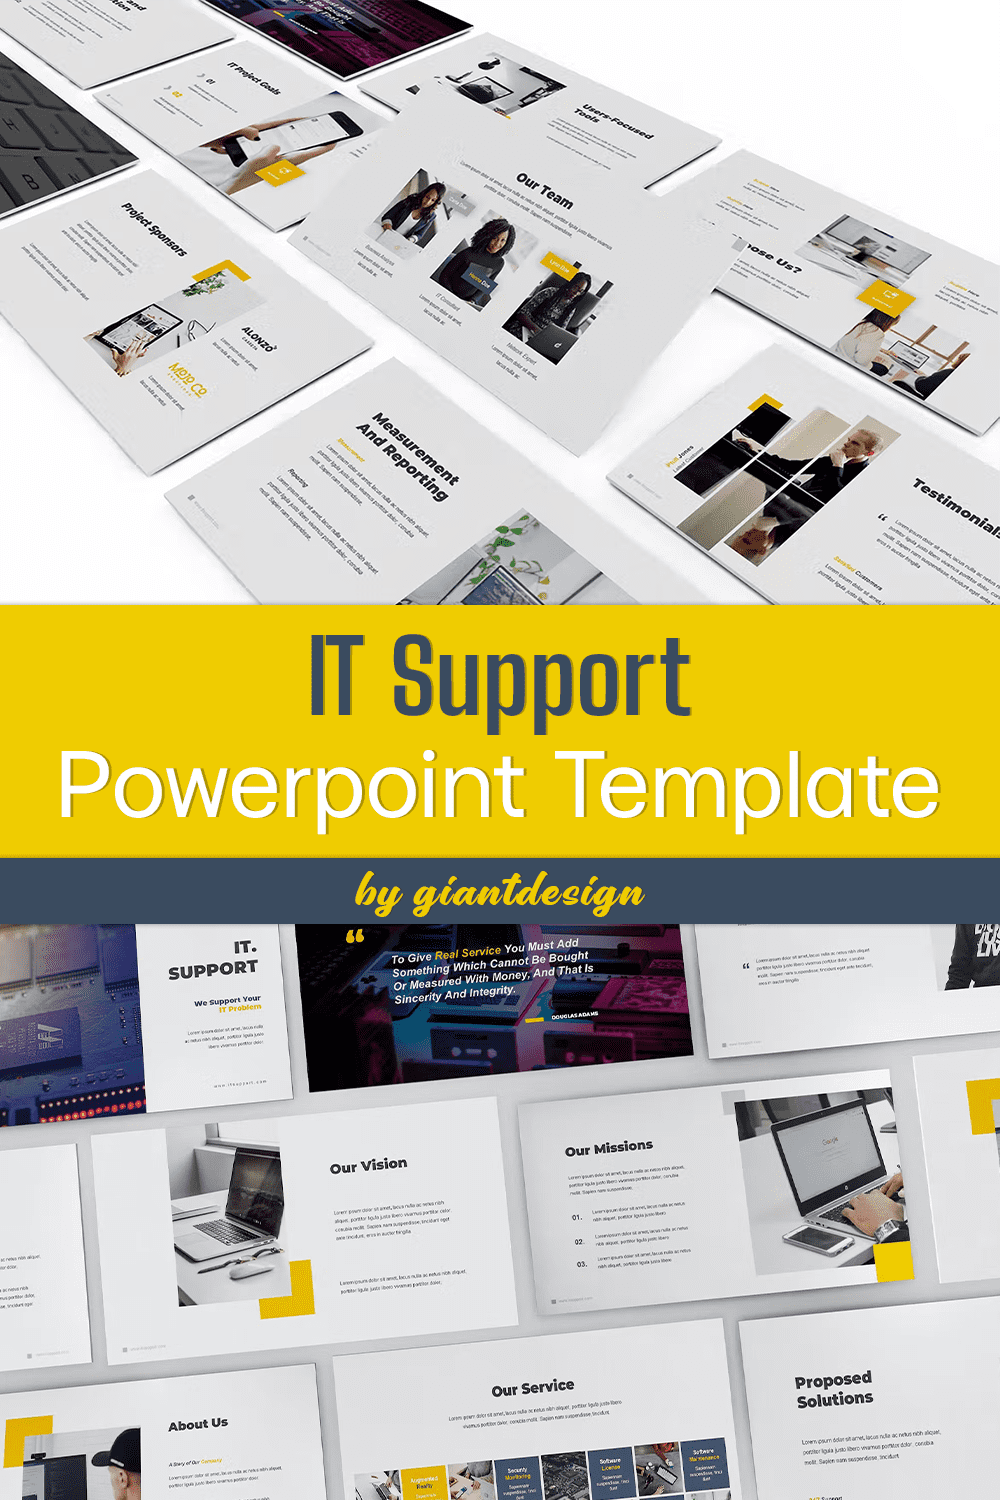 IT Support Powerpoint Template - Pinterest.